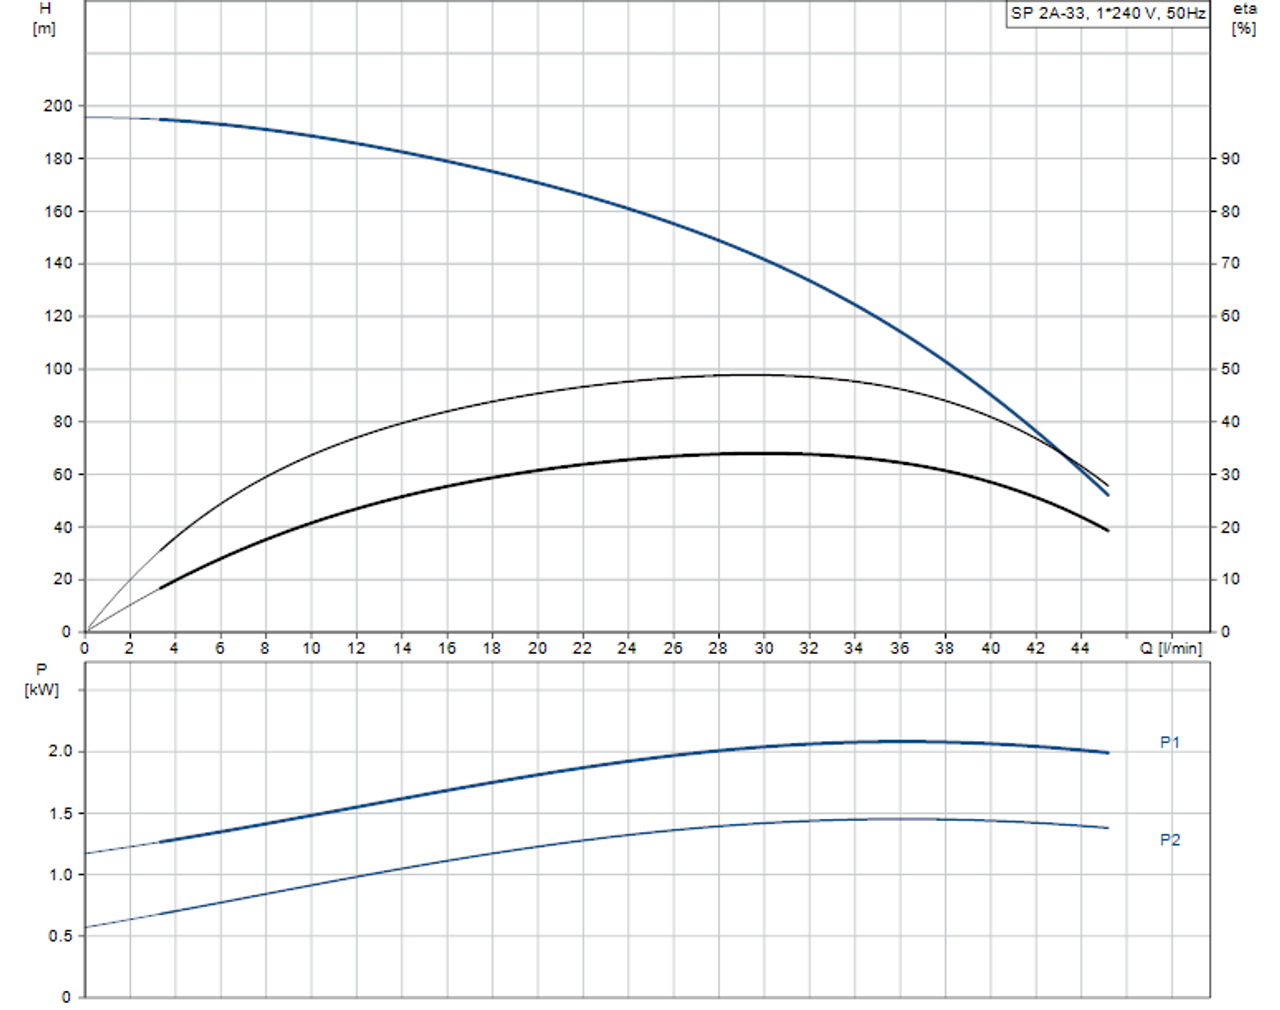 SP 2A-33 Performance Curve